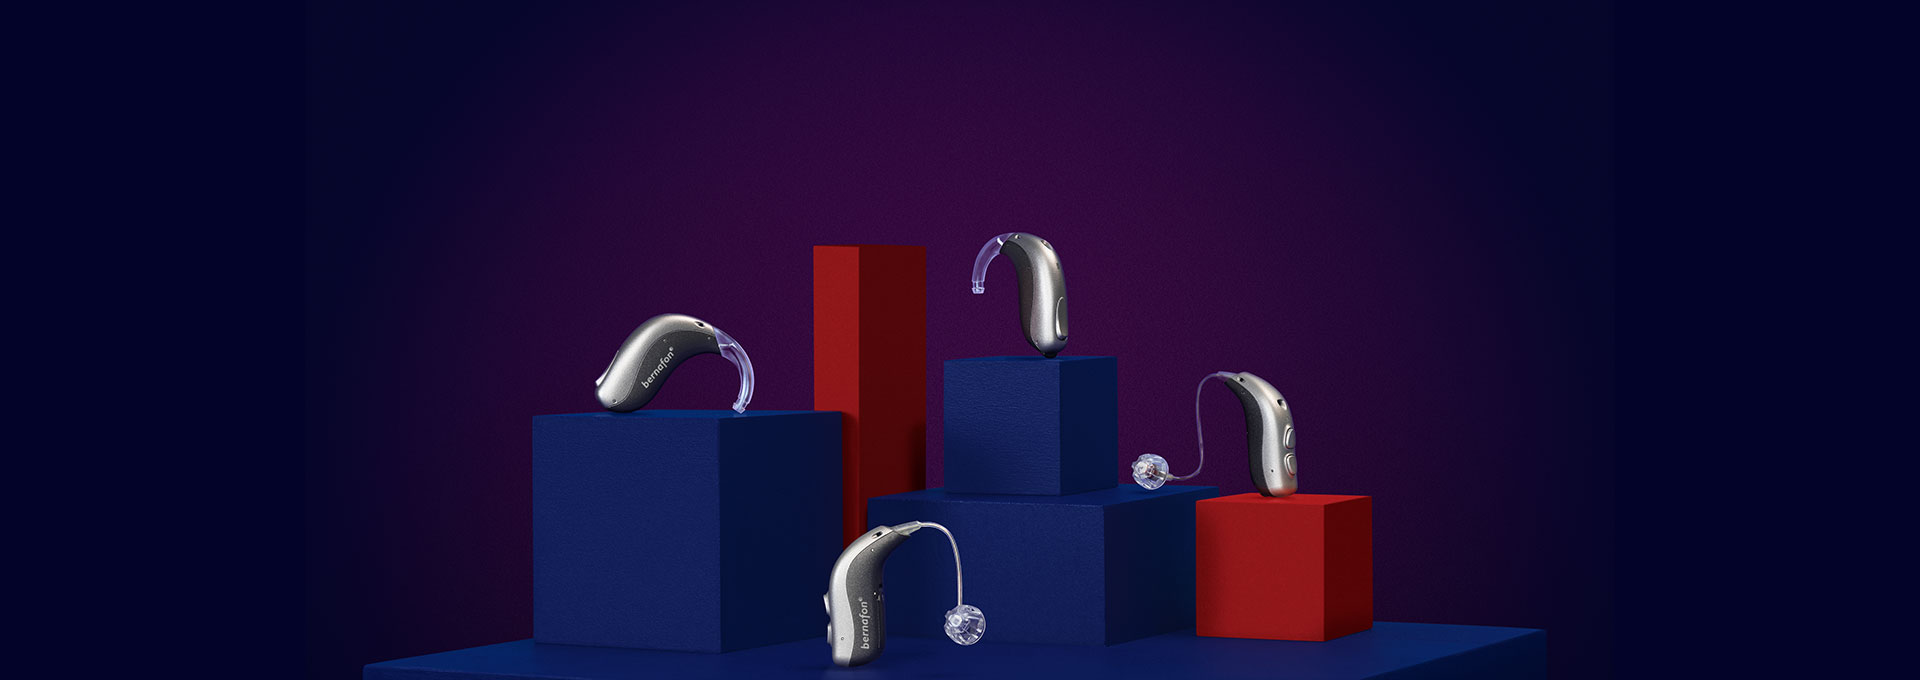 4 Bernafon Alpha hearing aids (miniBTE T R, miniRITE T R, miniBTE T, miniRITE T) on red and blue cubes with purple background